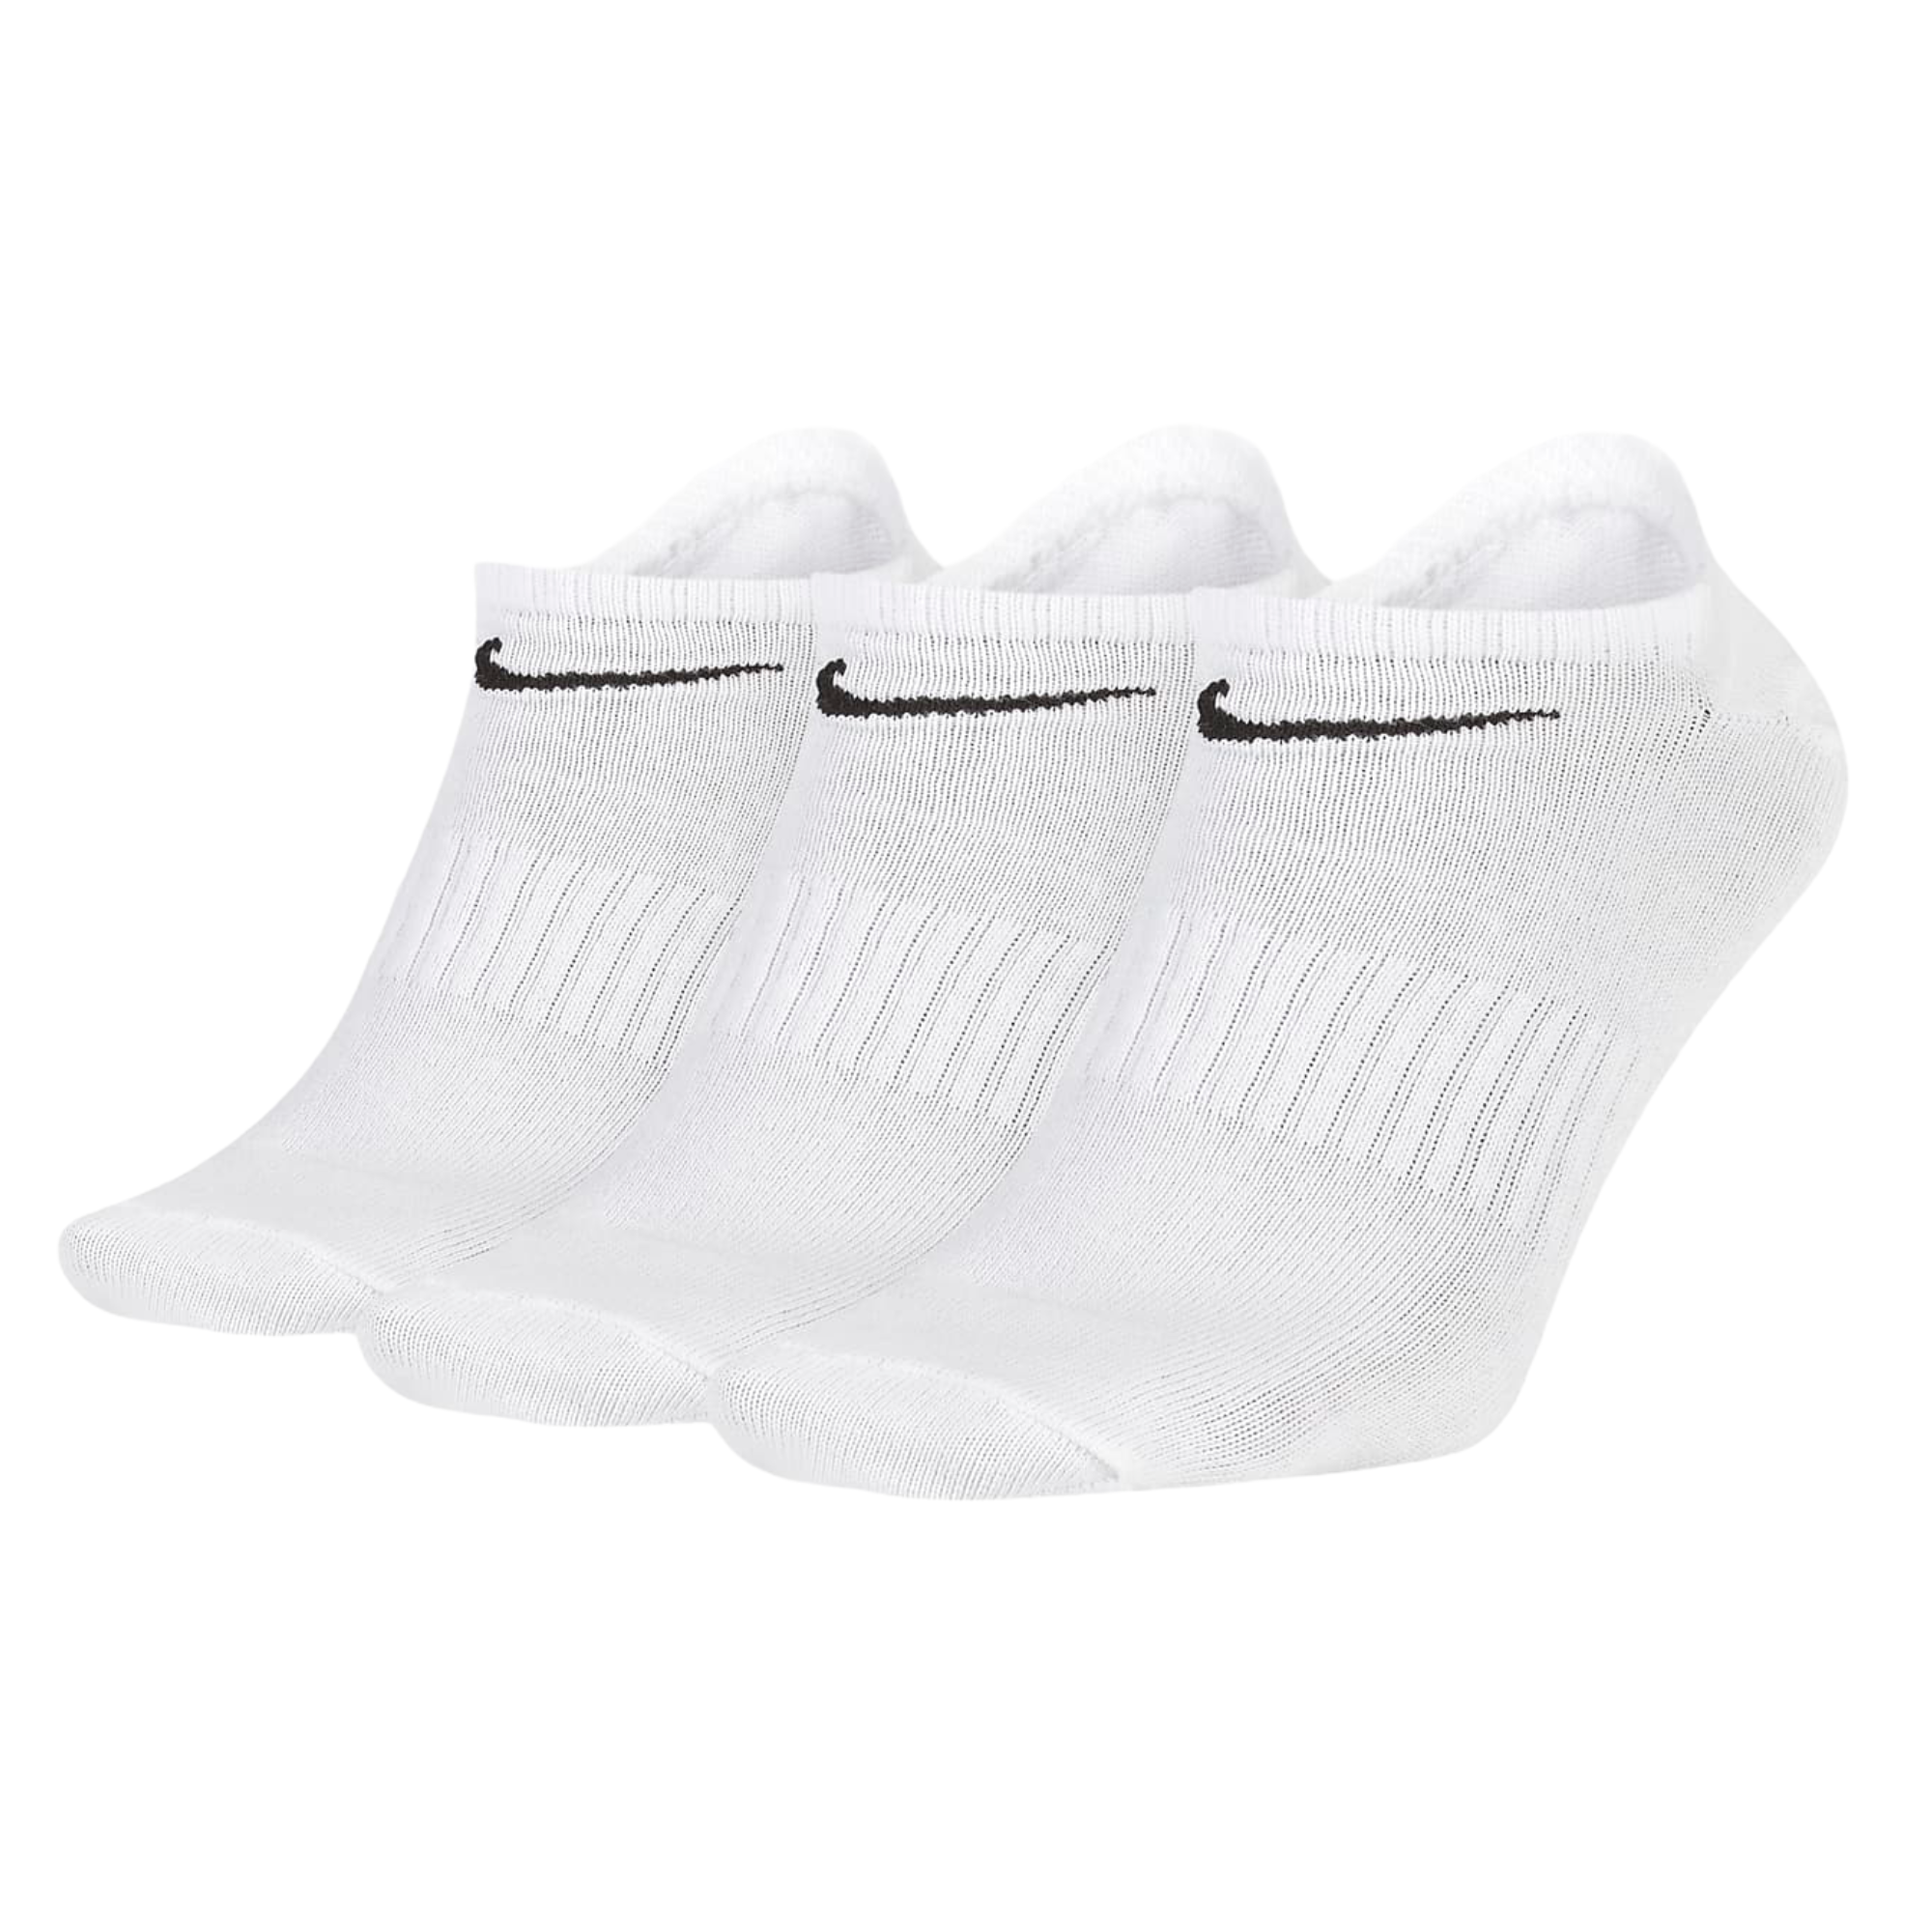 Rond en rond Onschuldig toelage Nike SB Everyday Lightweight No Show Socks (3 Pack) White - Orchard  Skateshop